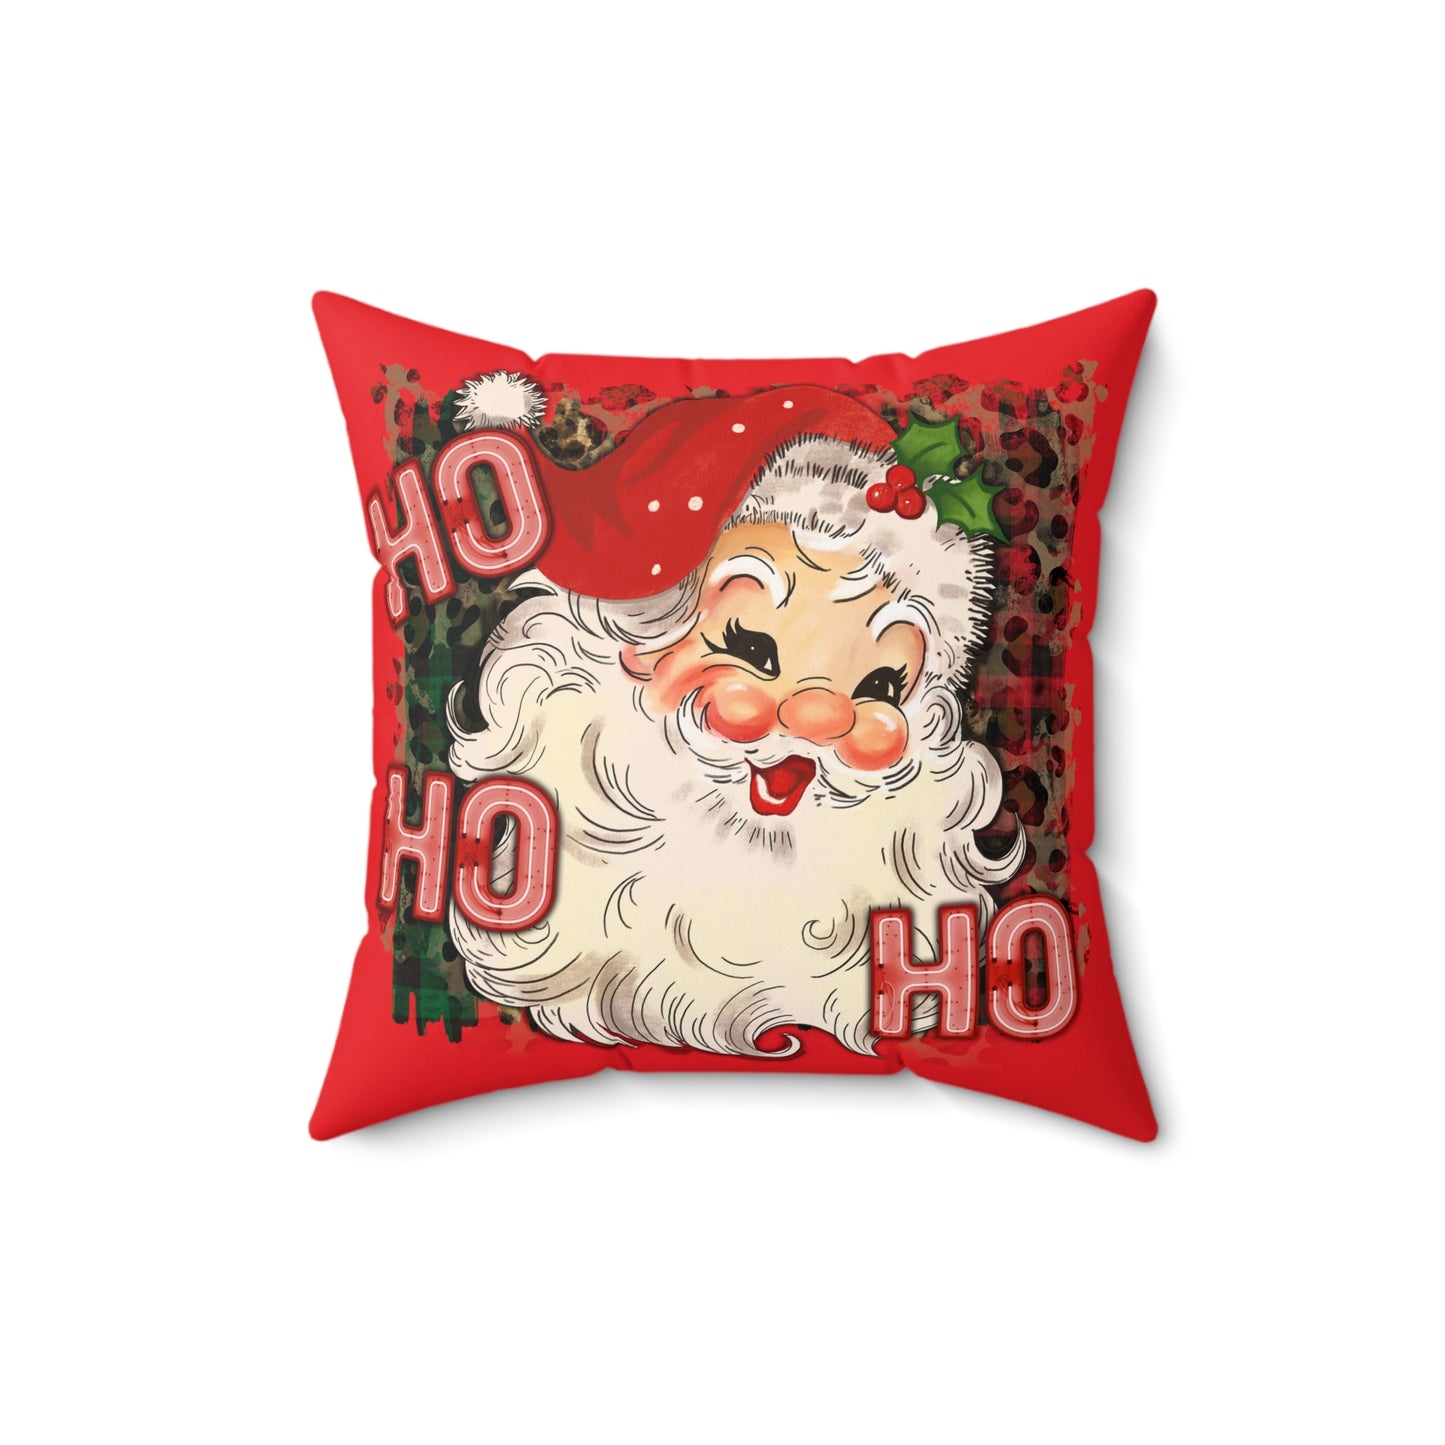 Retro Santa Pillow, Santa Pillow Cover, Cute Christmas Throw Pillow Cover, 18x18 Holiday Square Pillow